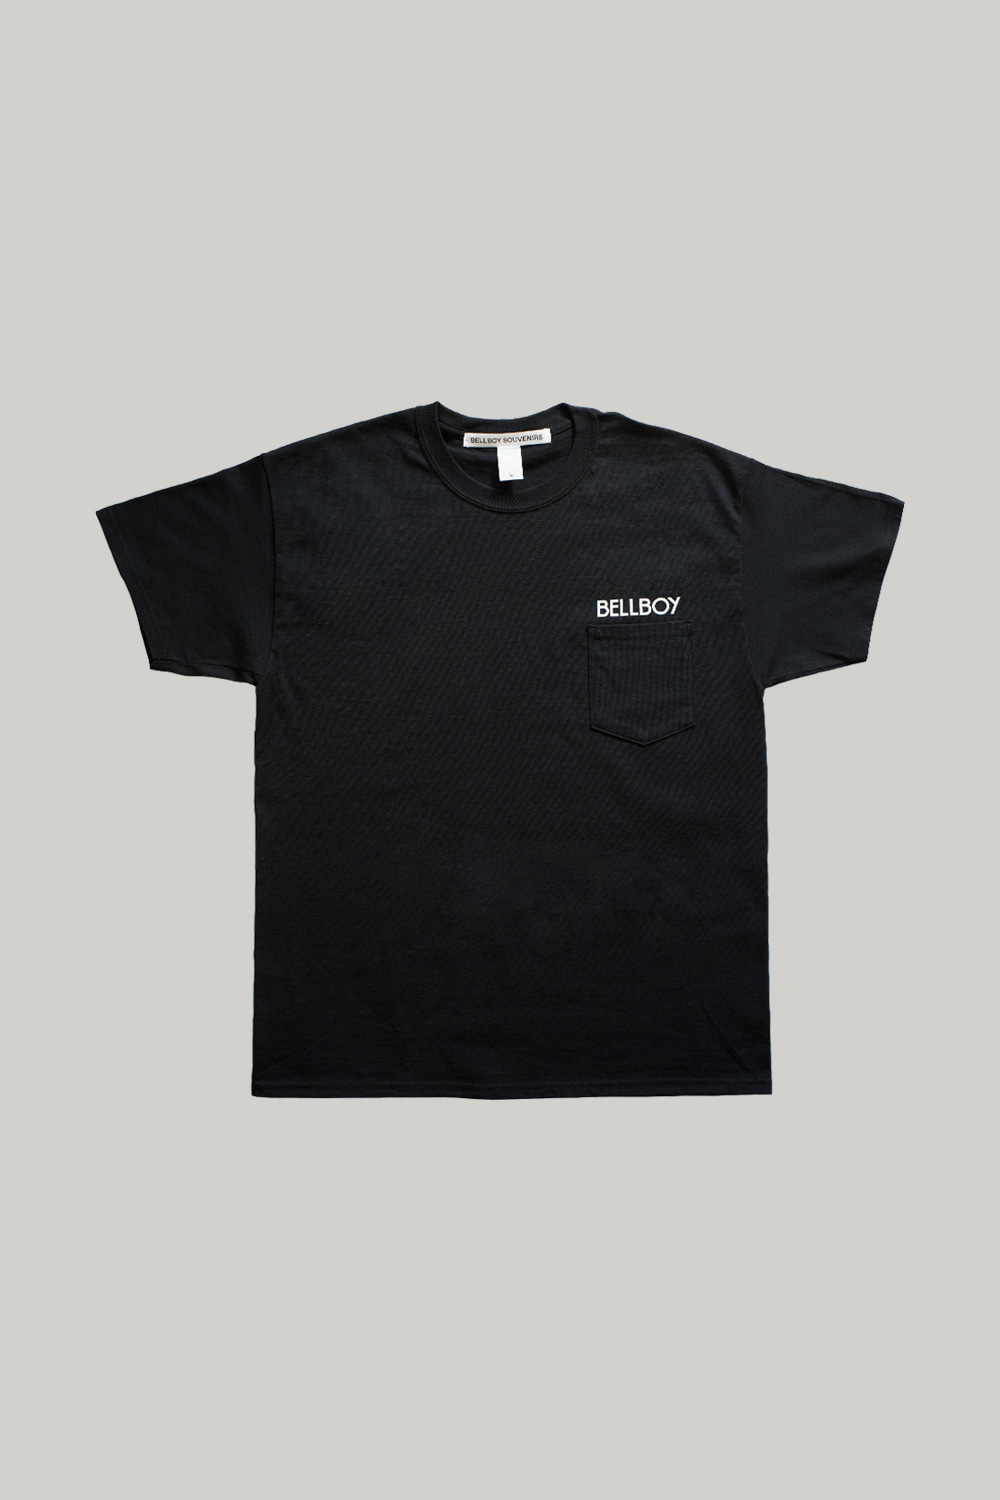 BELLBOY Pocket T-Shirts - Black 티셔츠, 워시드 헤비웨이트 티셔츠, 옥스포드셔츠, 버튼다운셔츠, 메신저백, 캔버스백